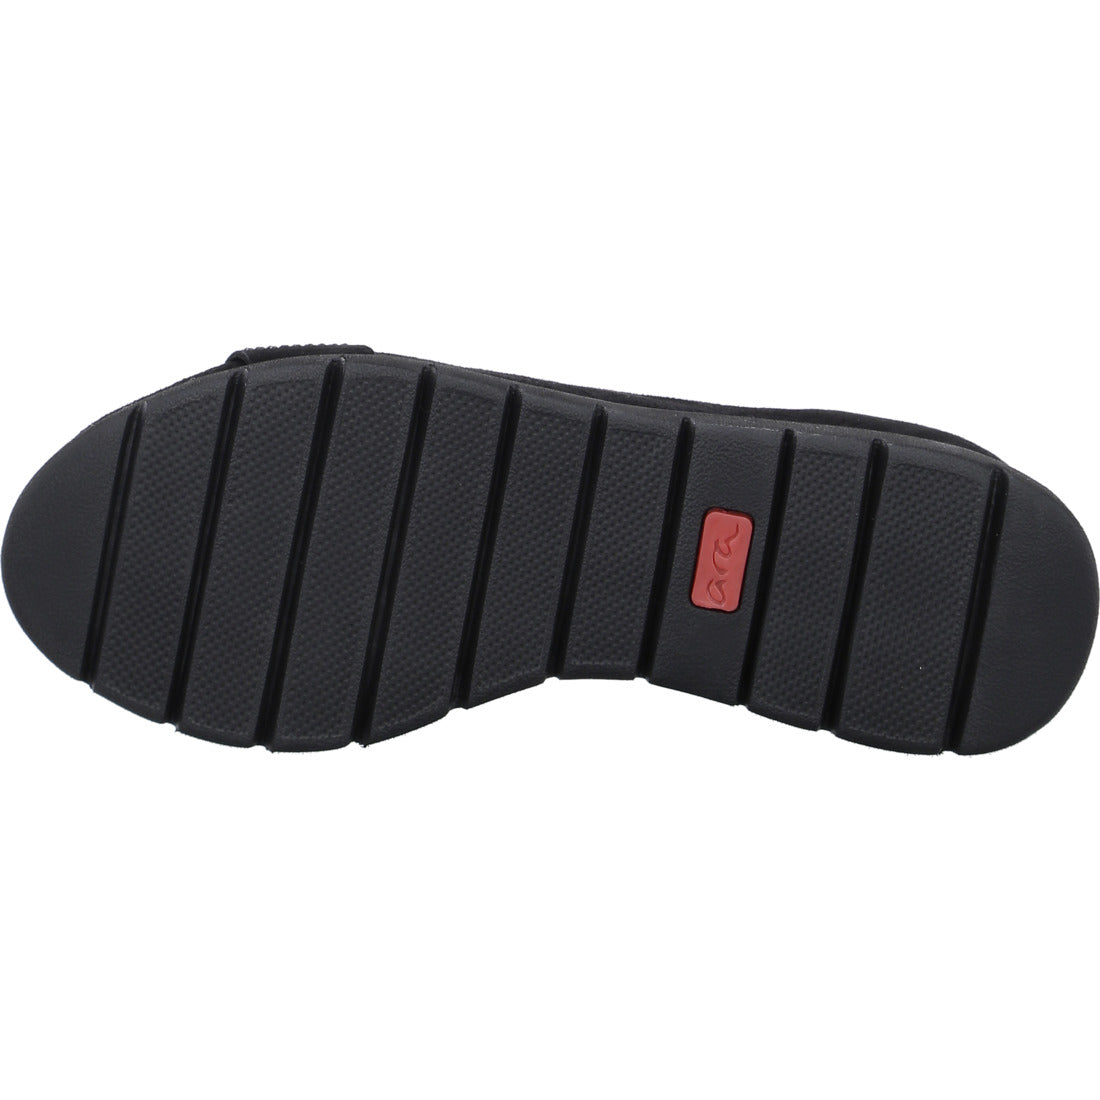 Ara 12-53703-01 Black Wedge Slip On Shoes with Diamonte Detailing